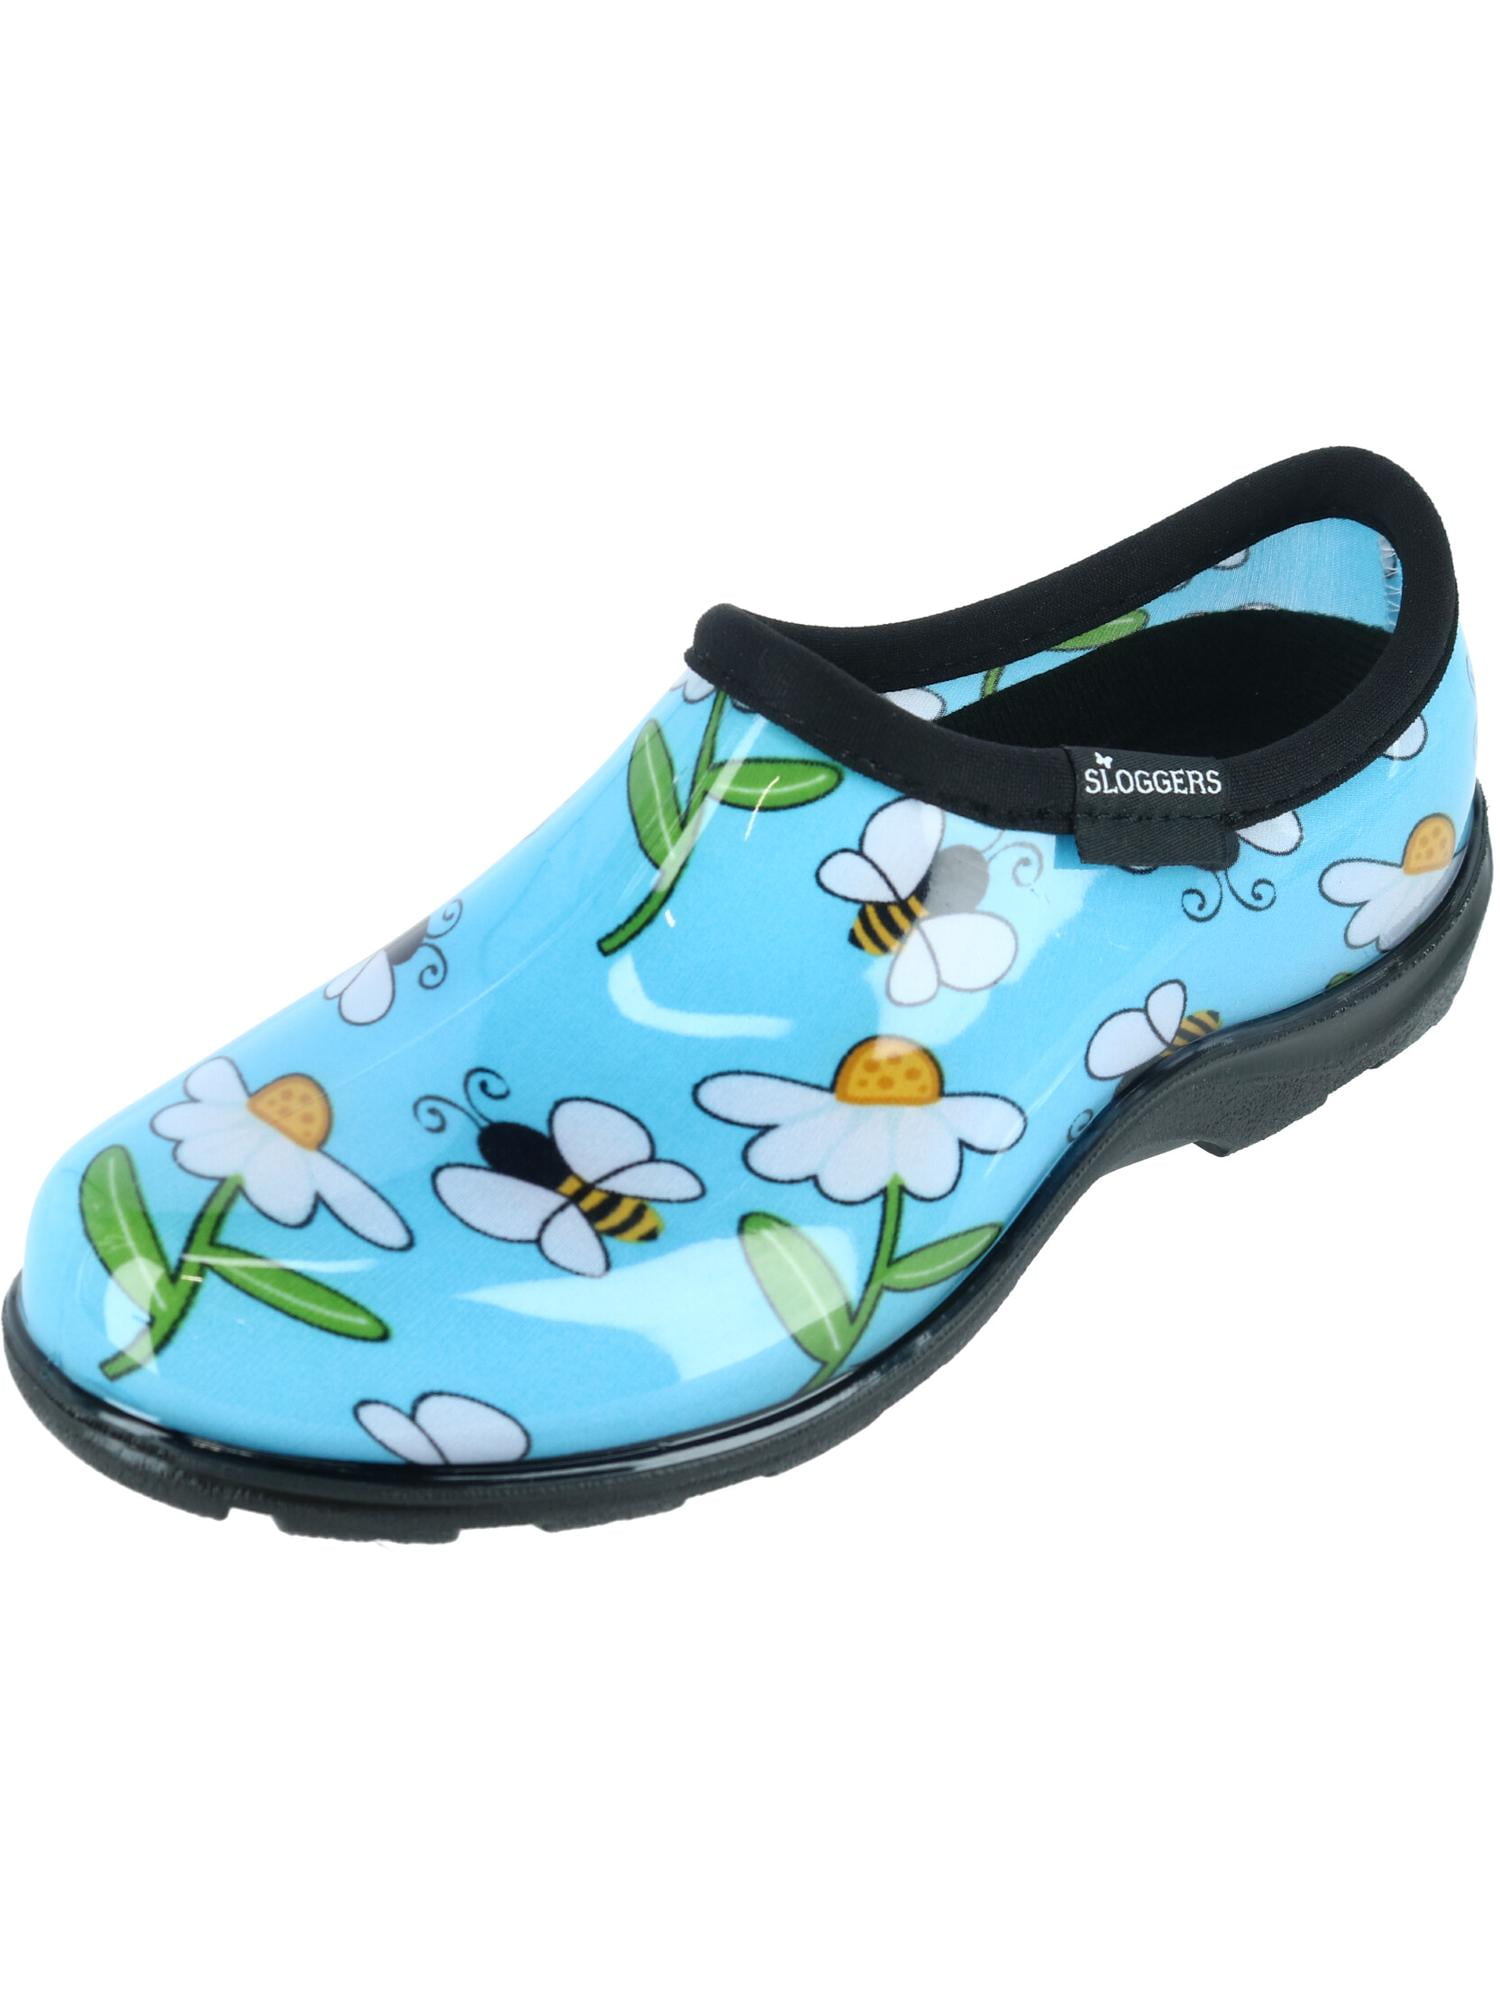 Premium Classic Solid Green Women Sloggers Clogs Waterproof Garden Shoes